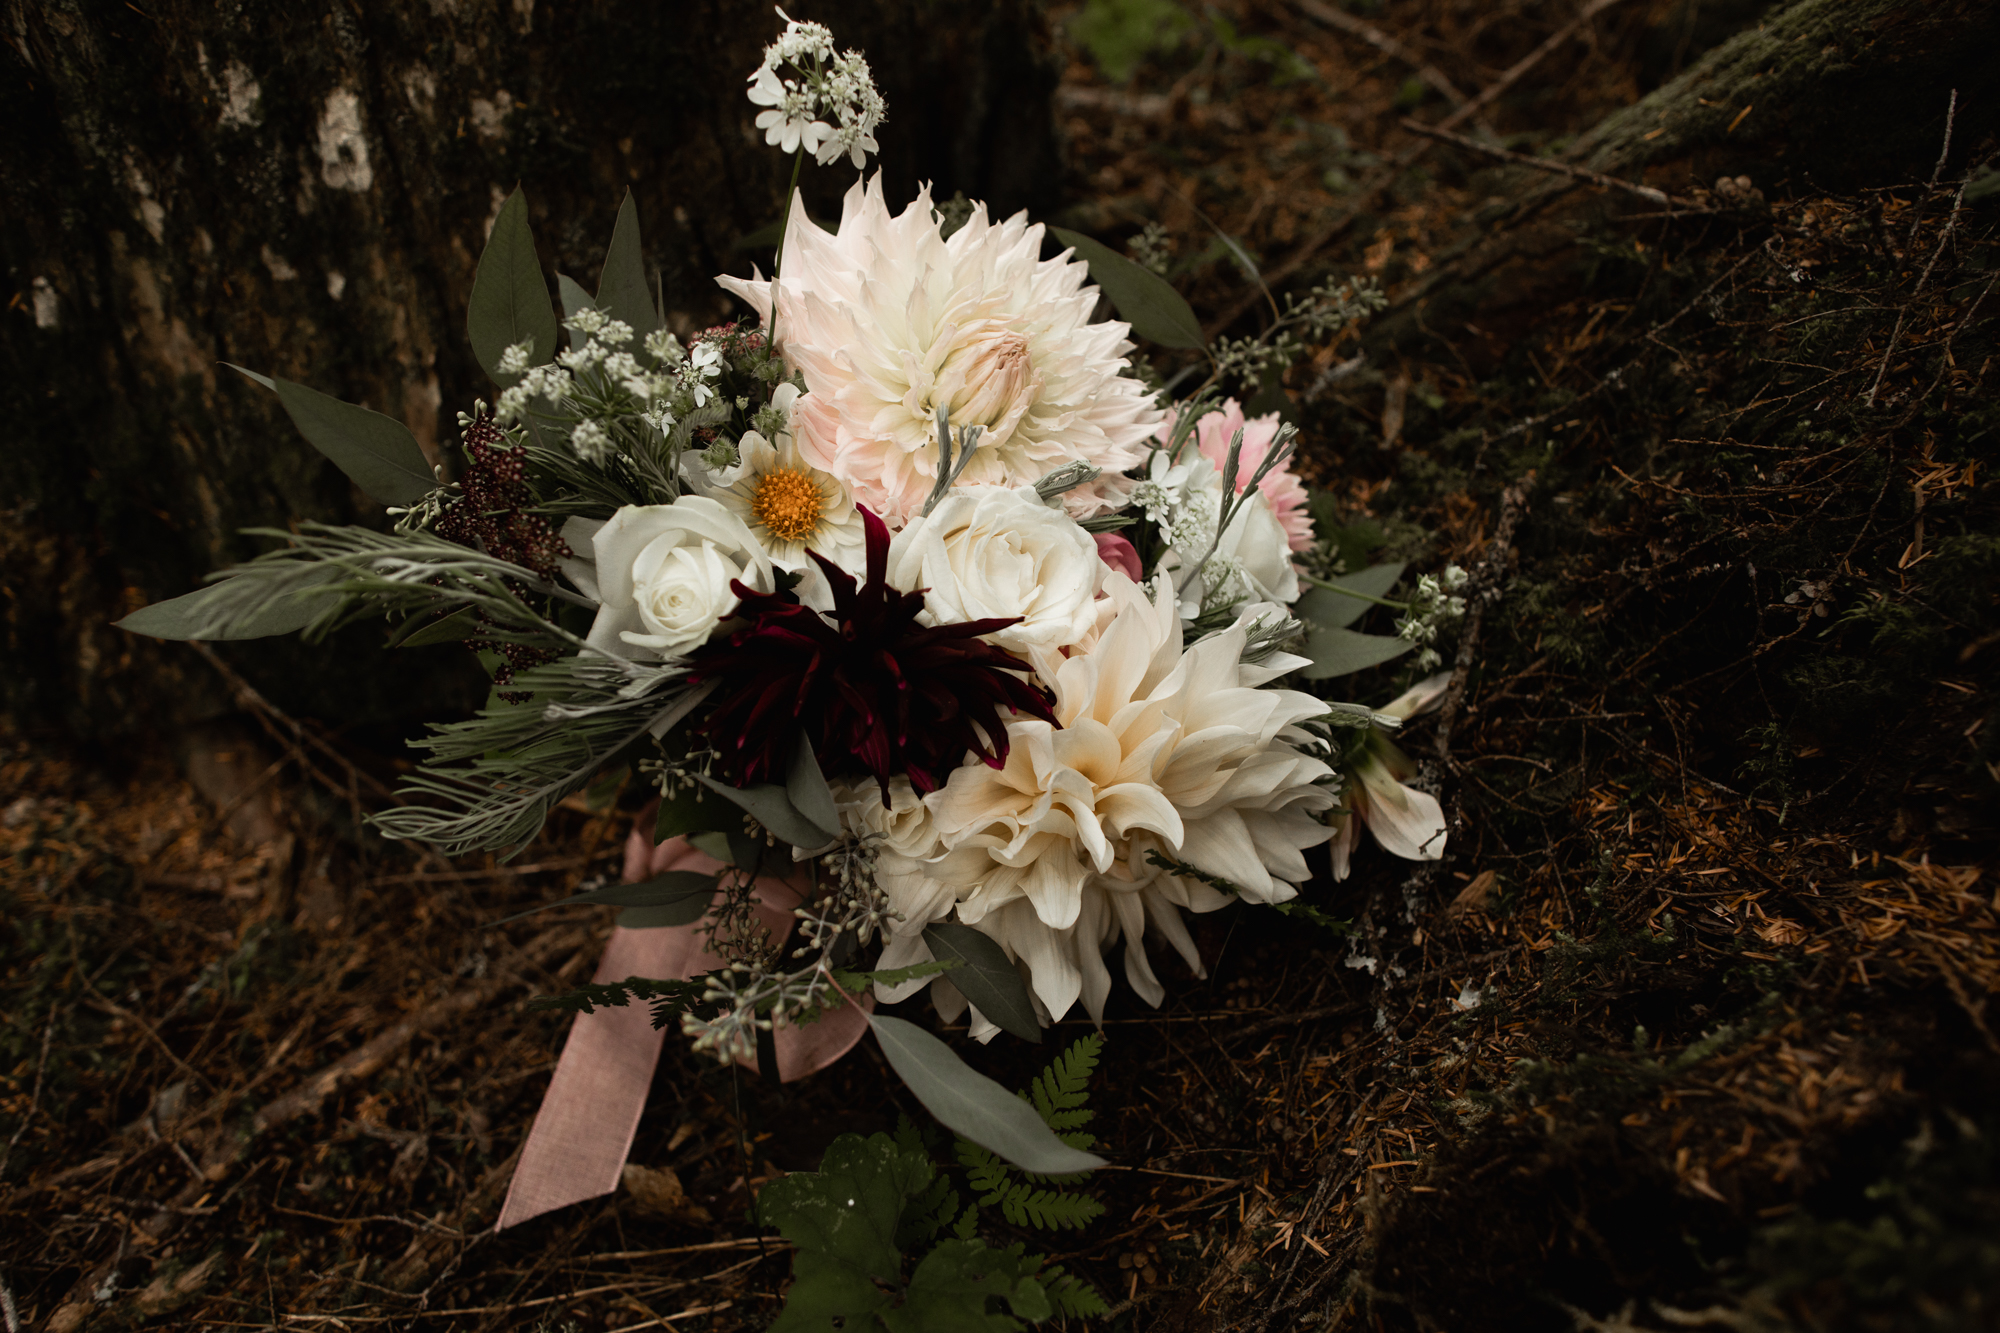 elopement bouquet